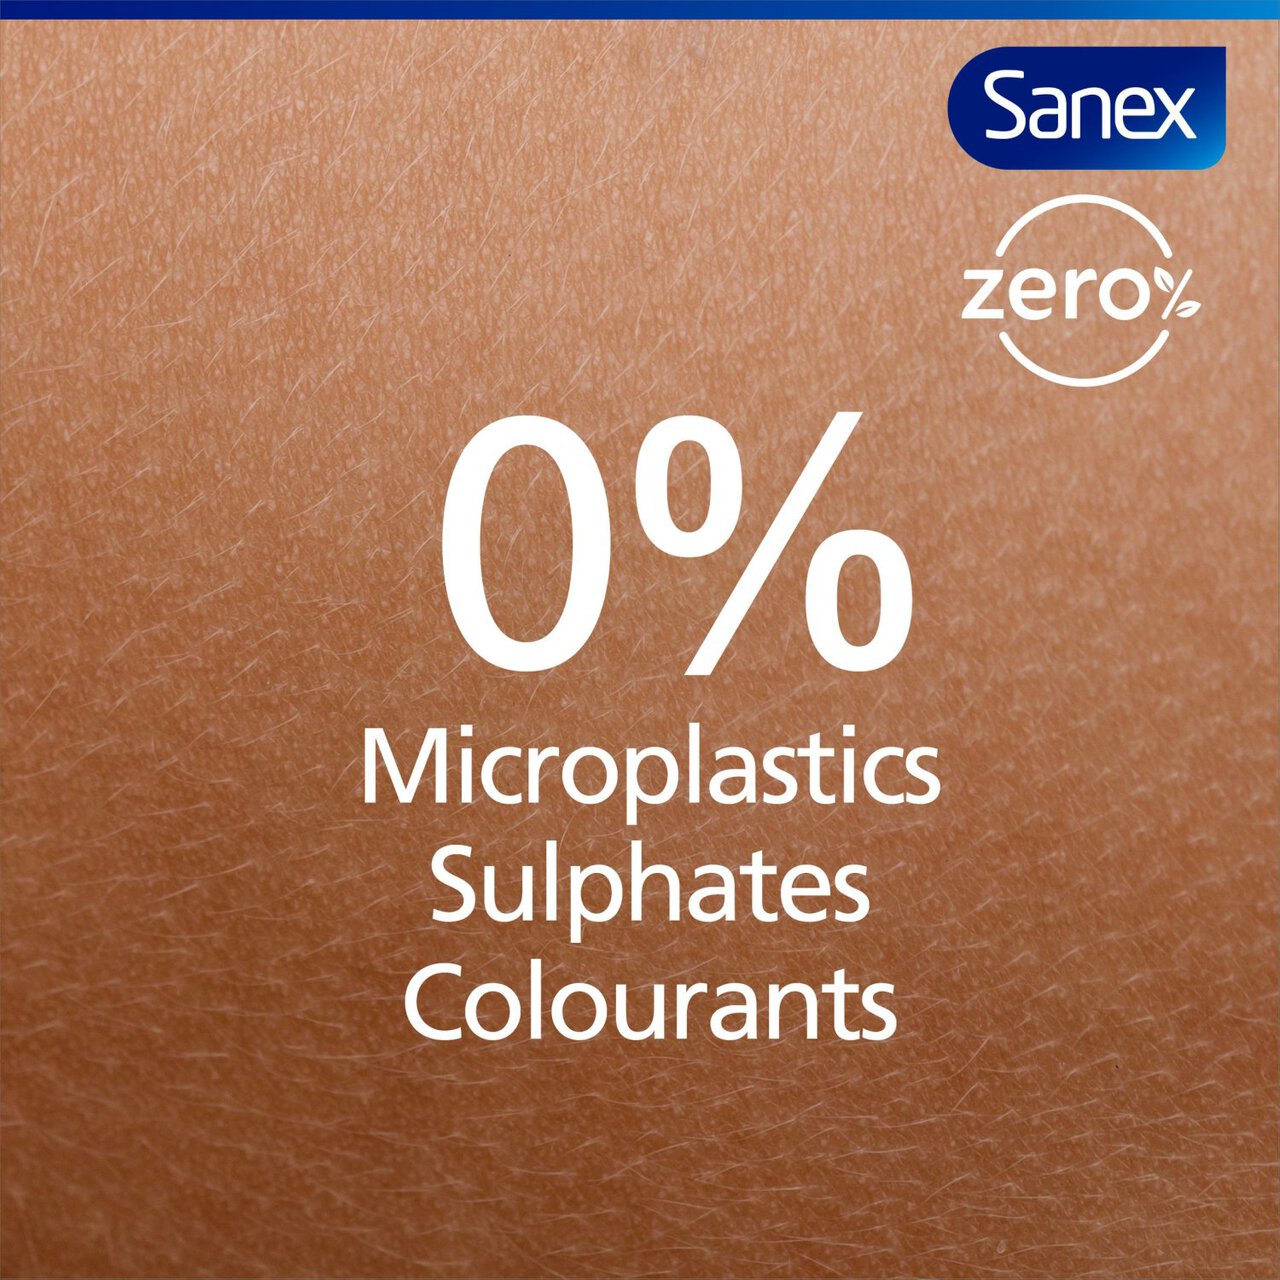 Sanex Zero % Dry Skin Shower Gel 225ml